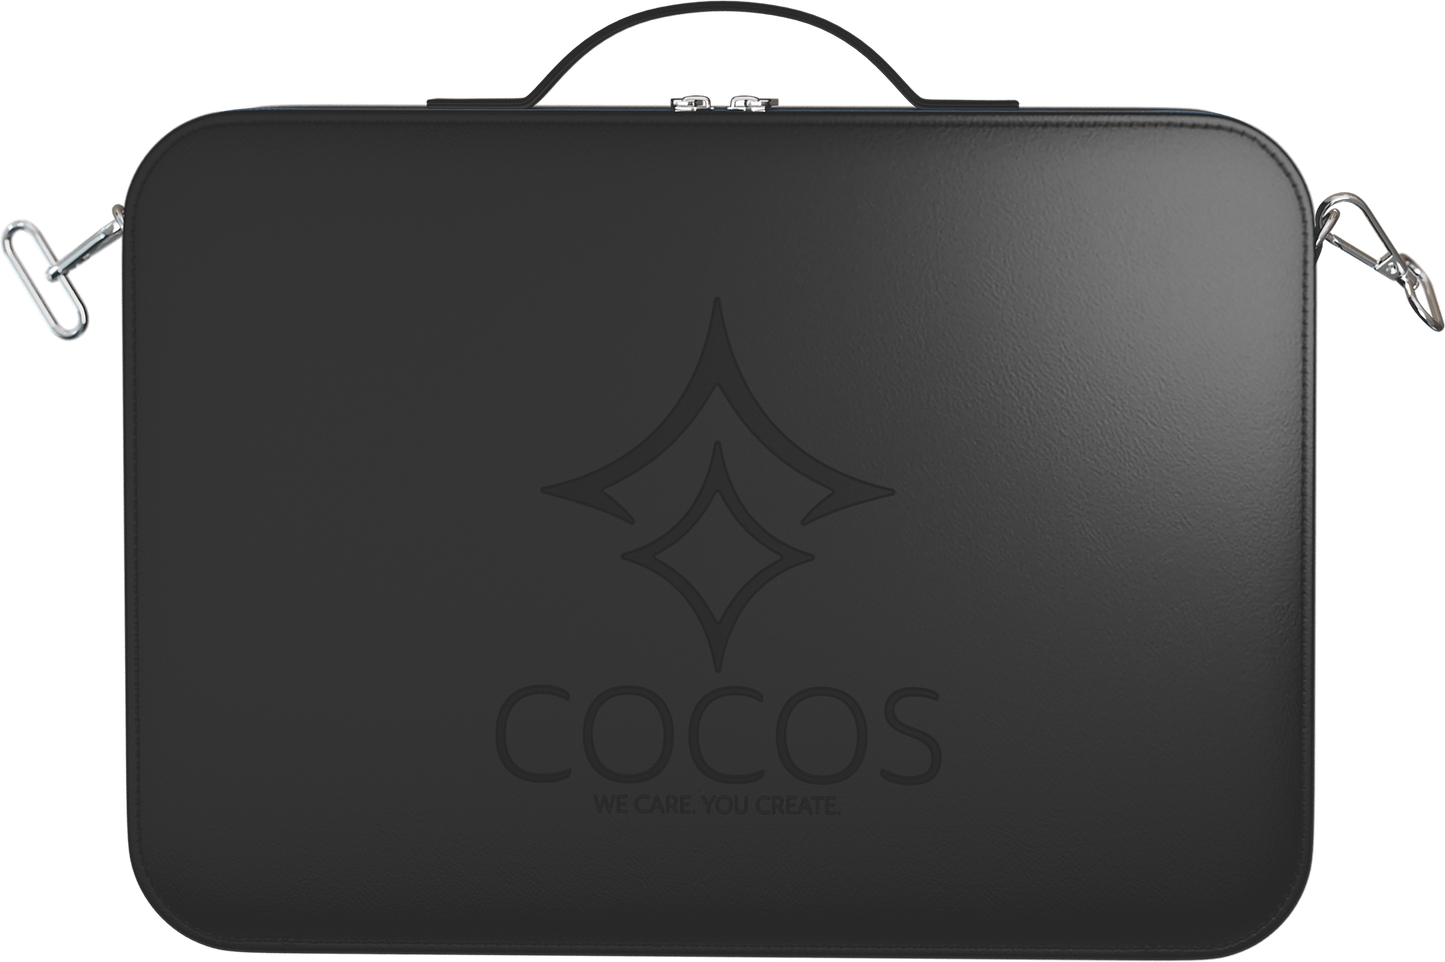 COCOS cosplayer box